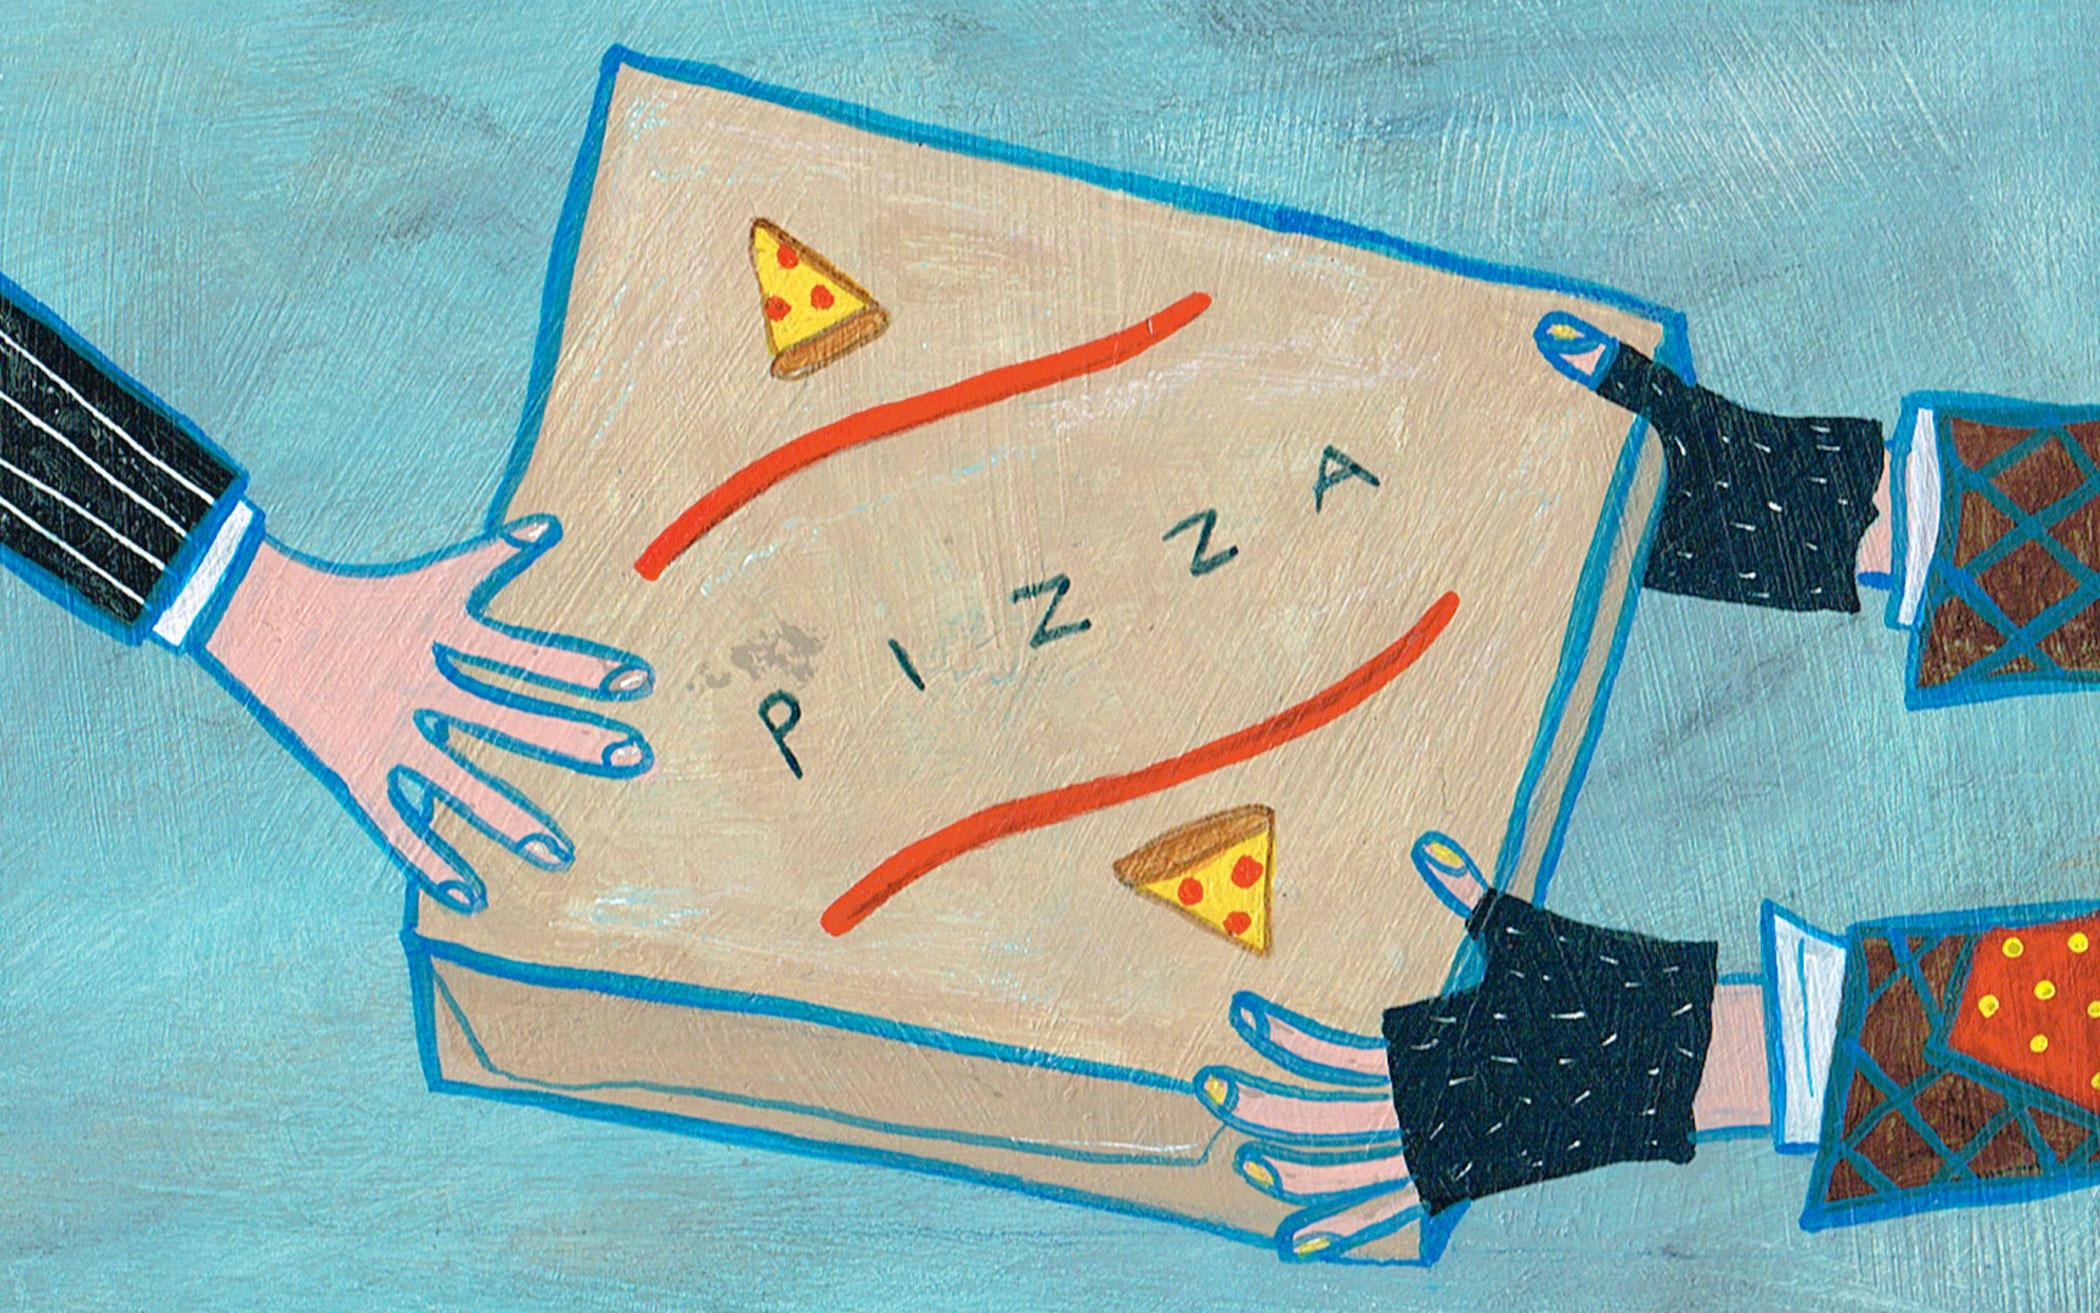 A Pizza Box SIgn